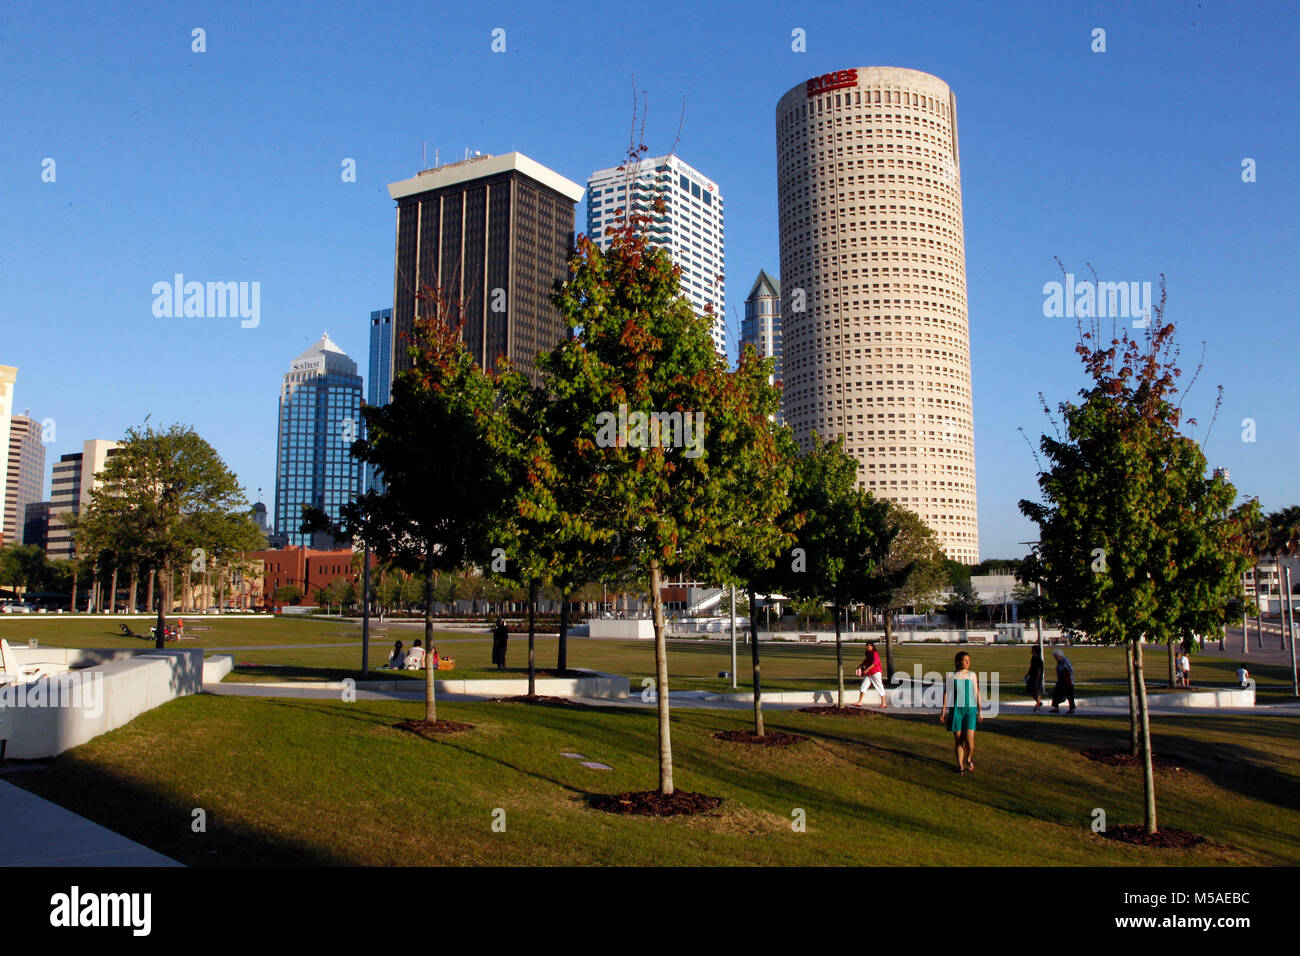 TAMPA, Florida: Downtown Tampa vedute paesaggistiche di Curtis Hixon Park lungo la Tampa Riverwalk. Foto Stock